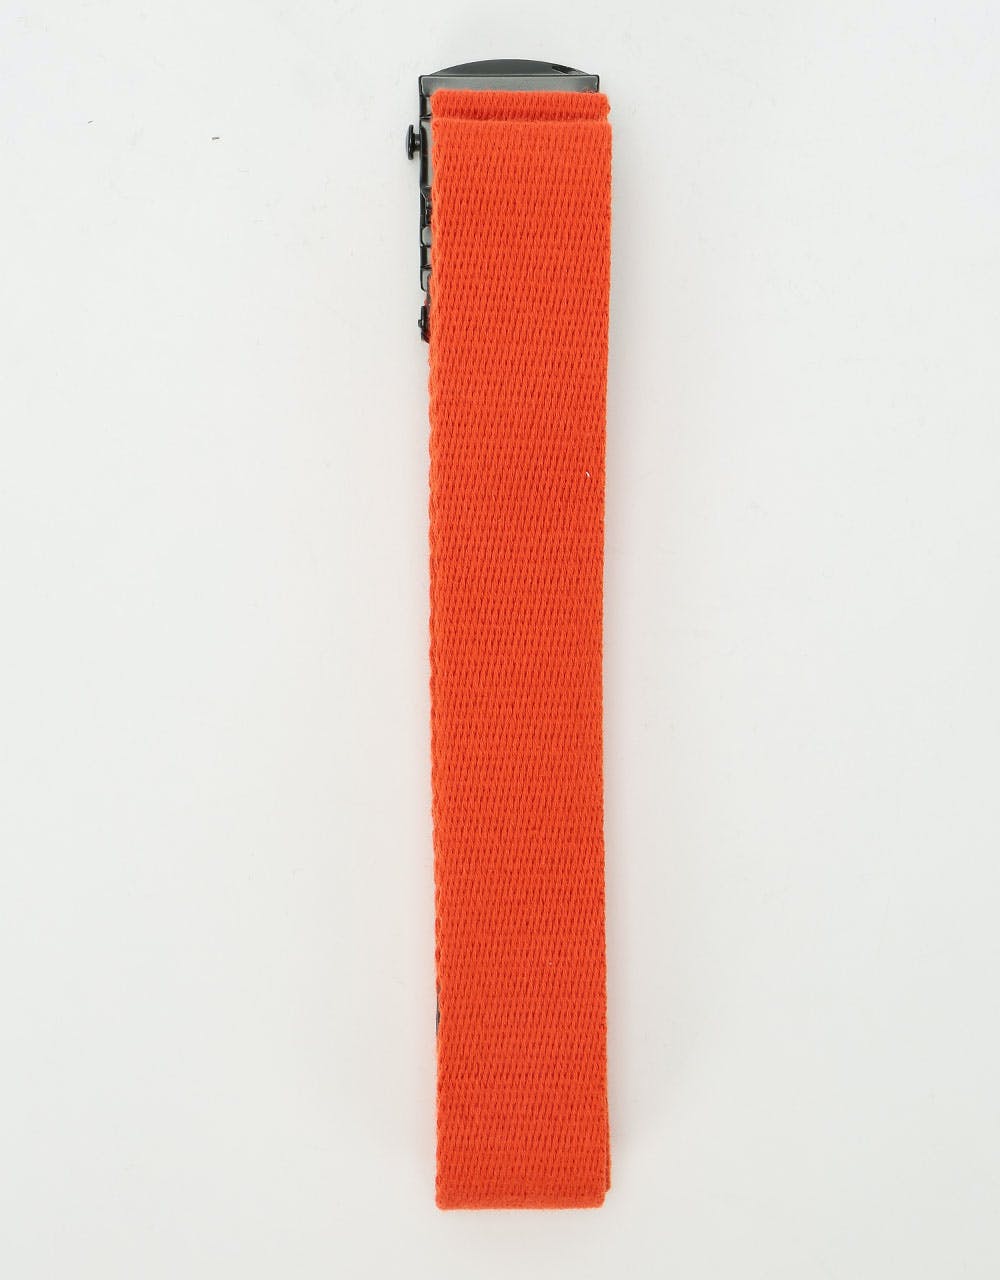 Carhartt WIP Orbit Web Belt - Brick Orange/Black